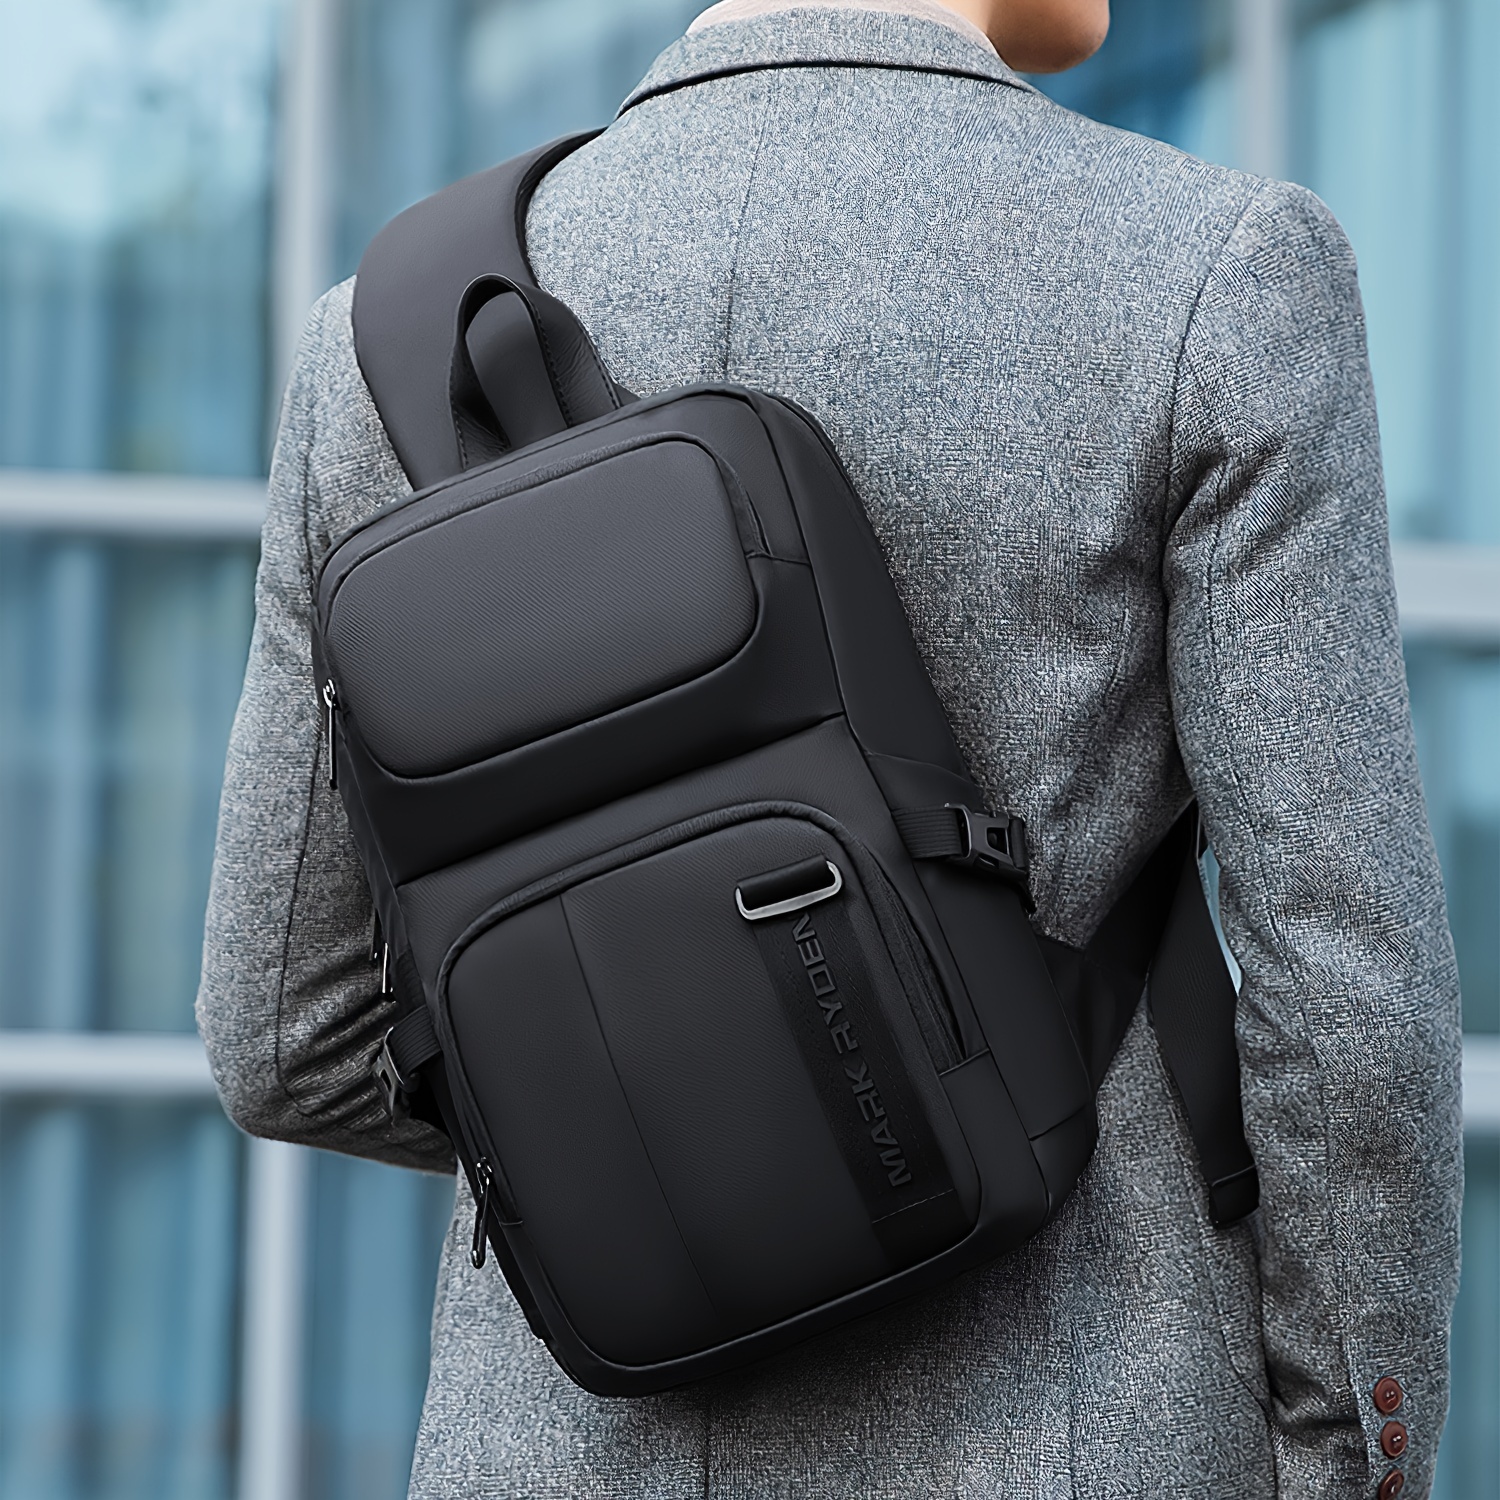 MARK RYDEN Shoulder Bag Men's Crossbody Bag Large Capacity Chest Bag Multifunctional 14 Inch Laptop Case, School bags, Valentines Gifts